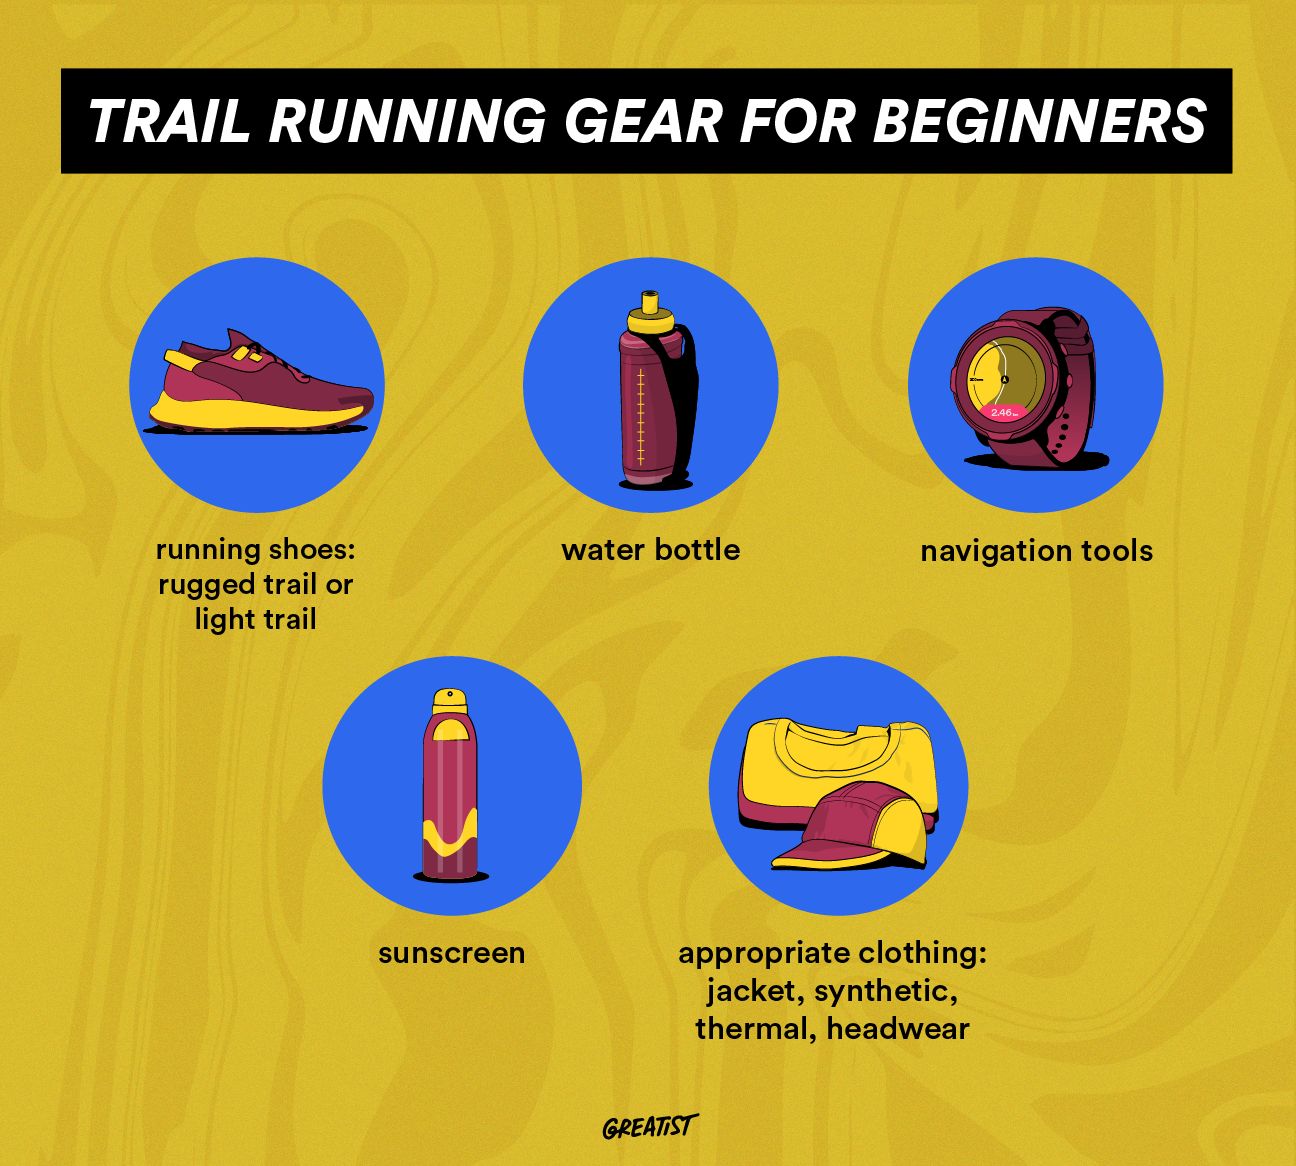 Trail Running for Beginners